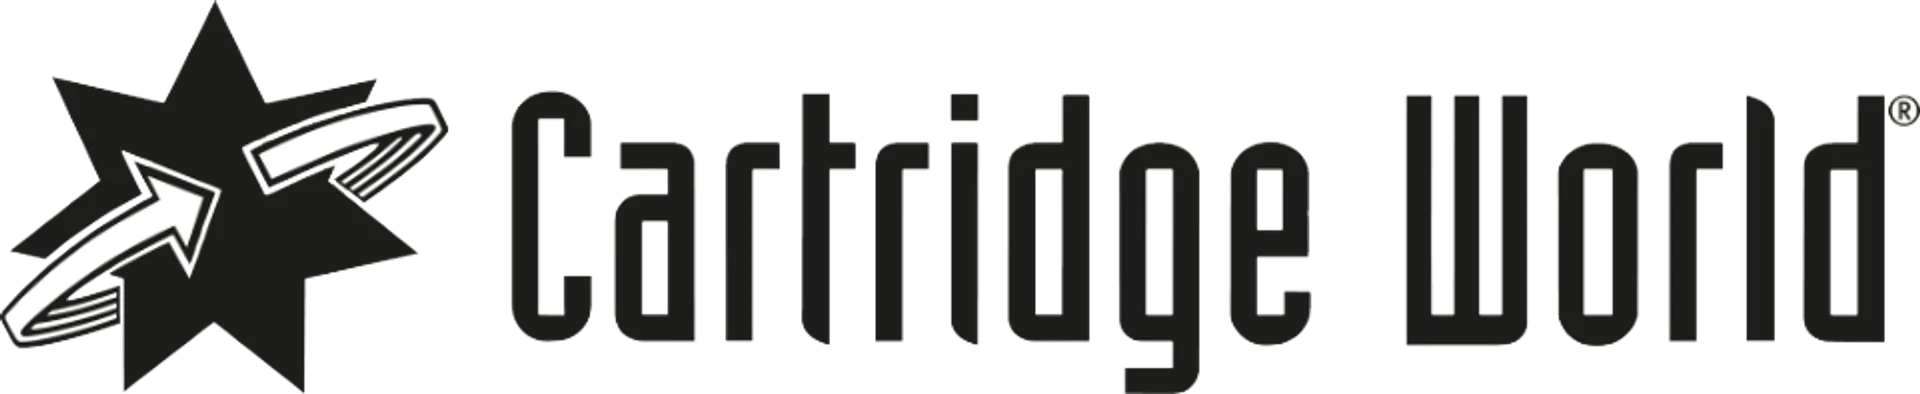 CARTRIDGE WORLD logo